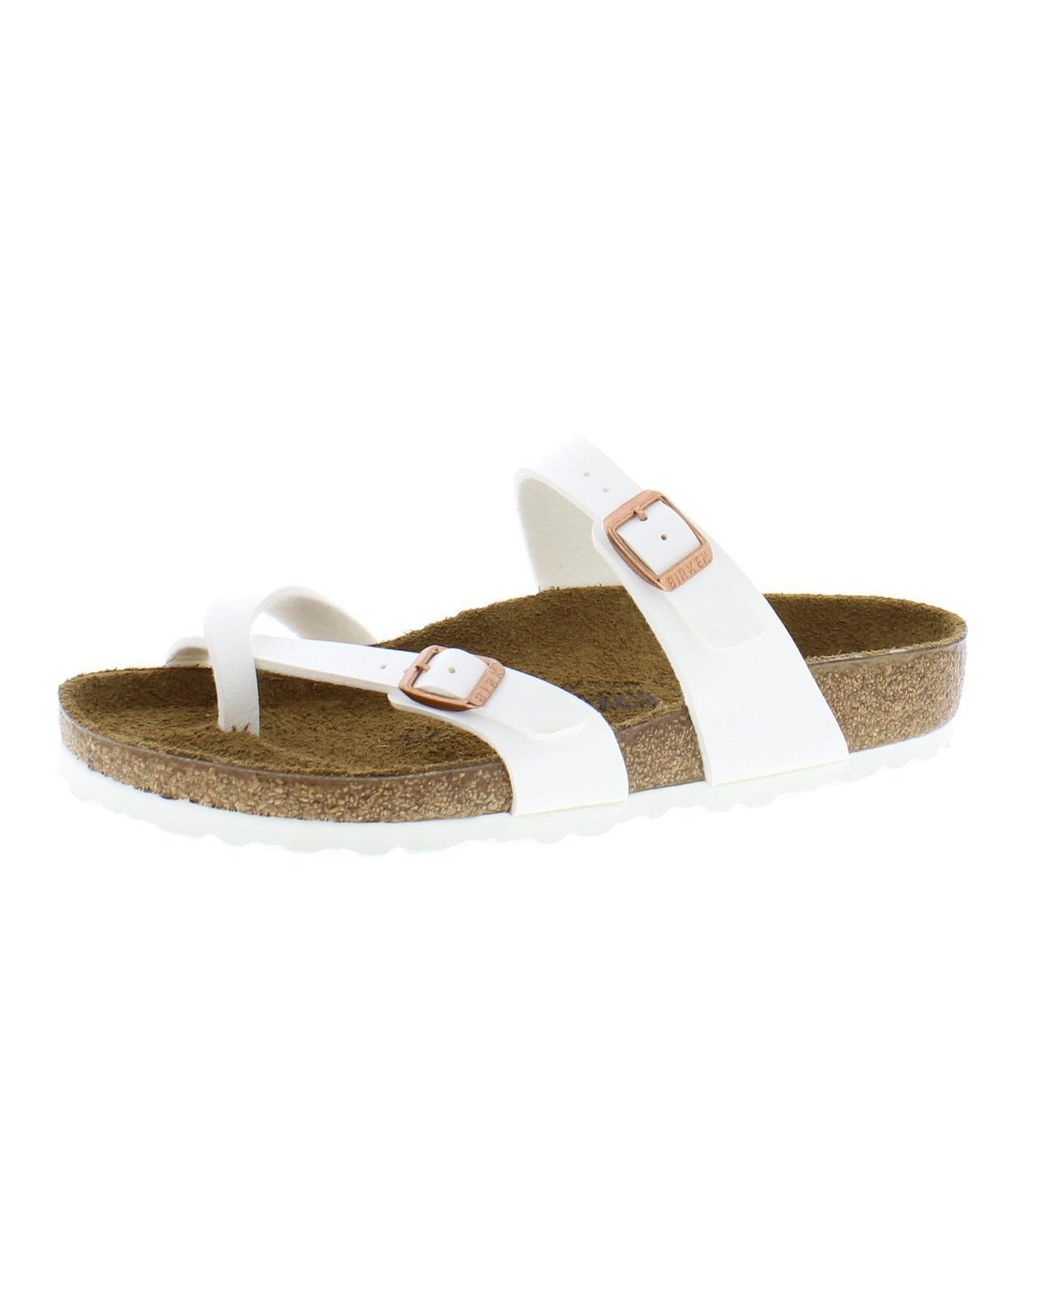 Birkenstock Mayari Flip-flop Leather Thong Sandals in White | Lyst